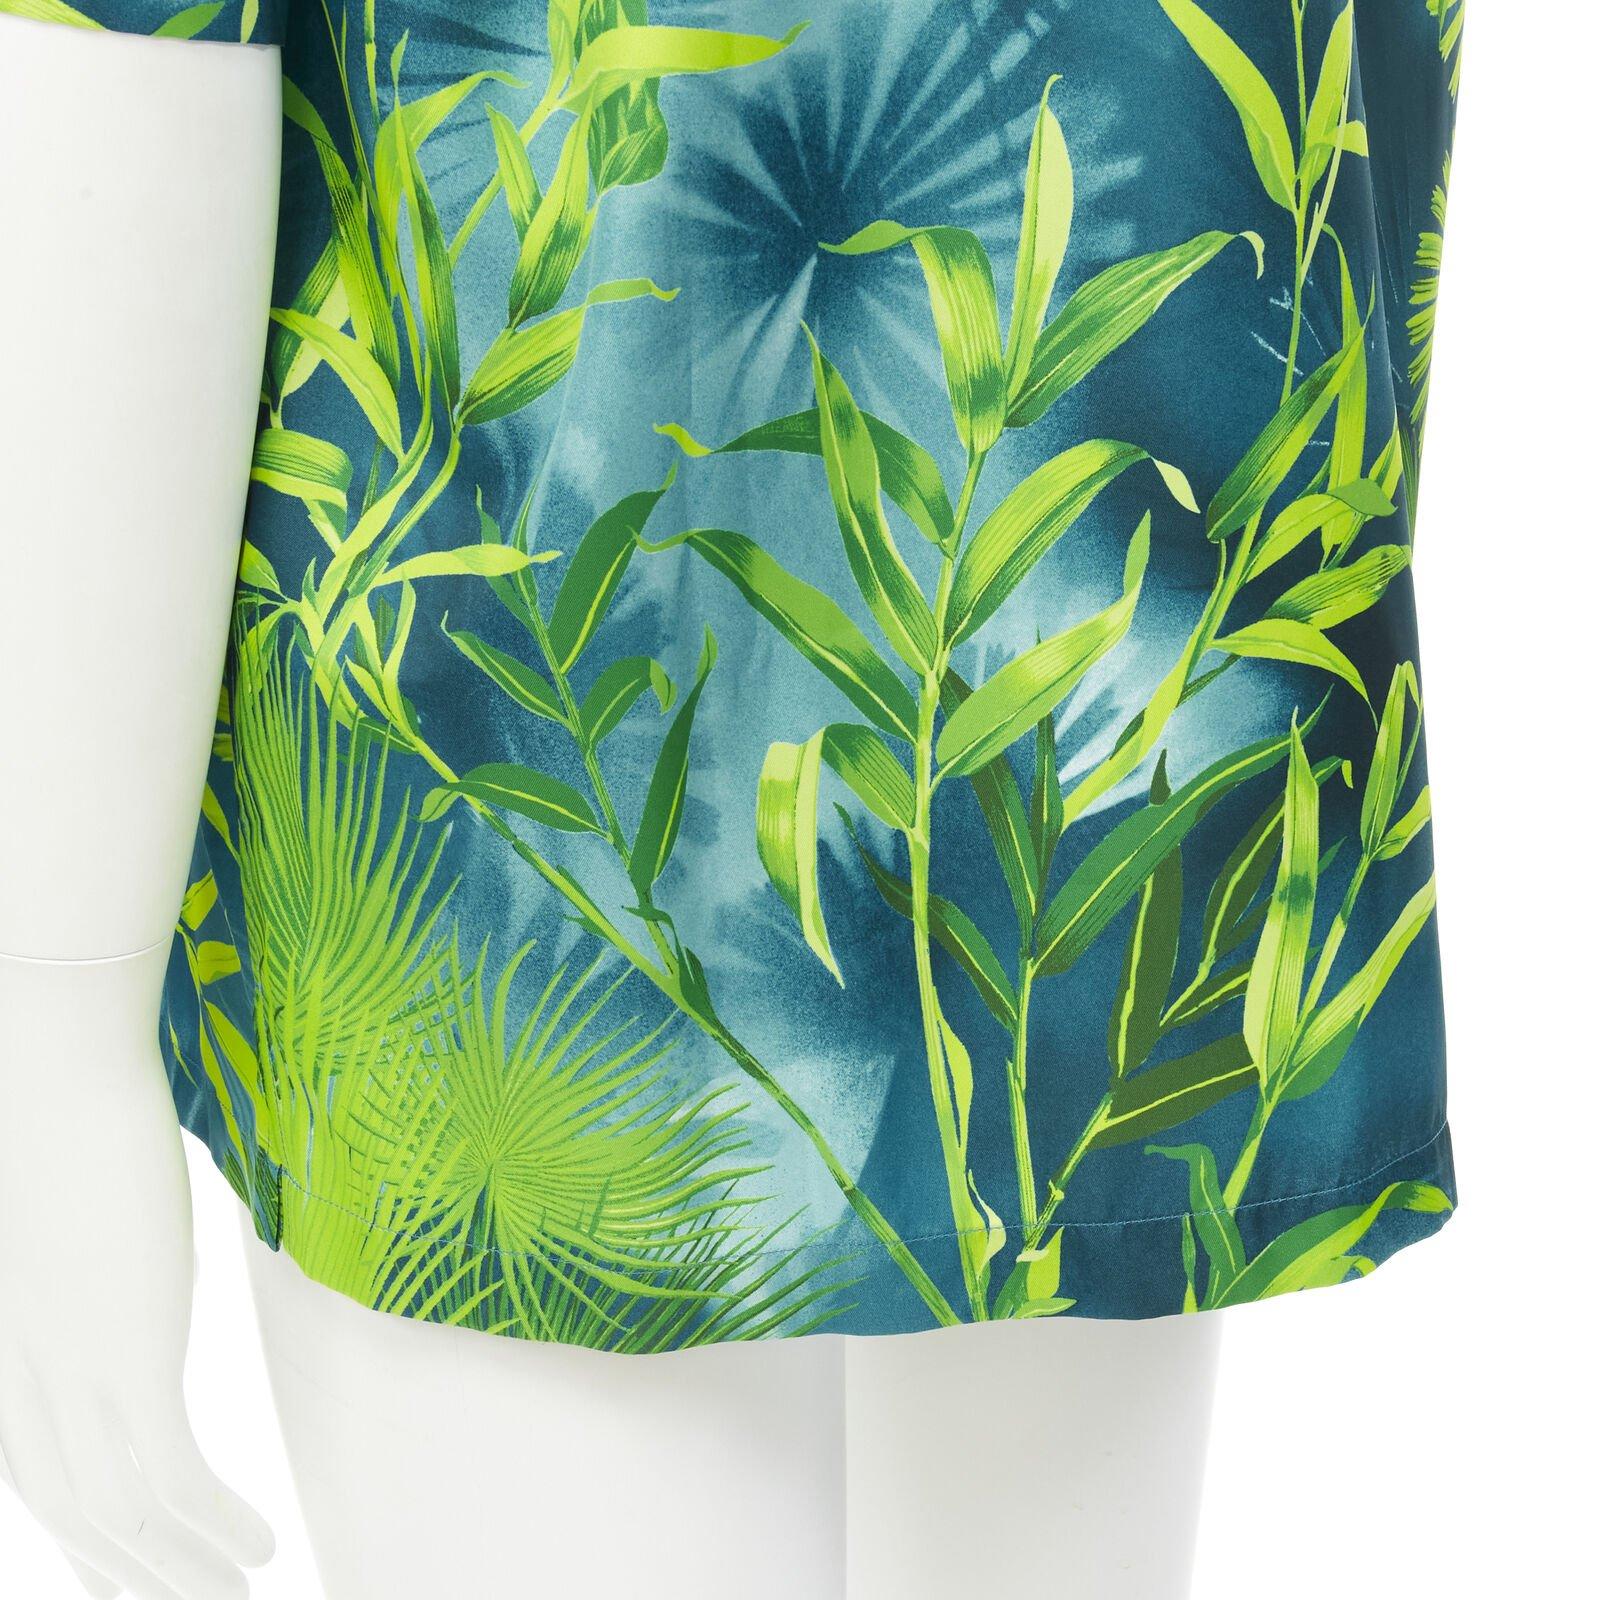 VERSACE 2020 Iconic JLo Jungle print green tropical print shirt EU41 XL 5